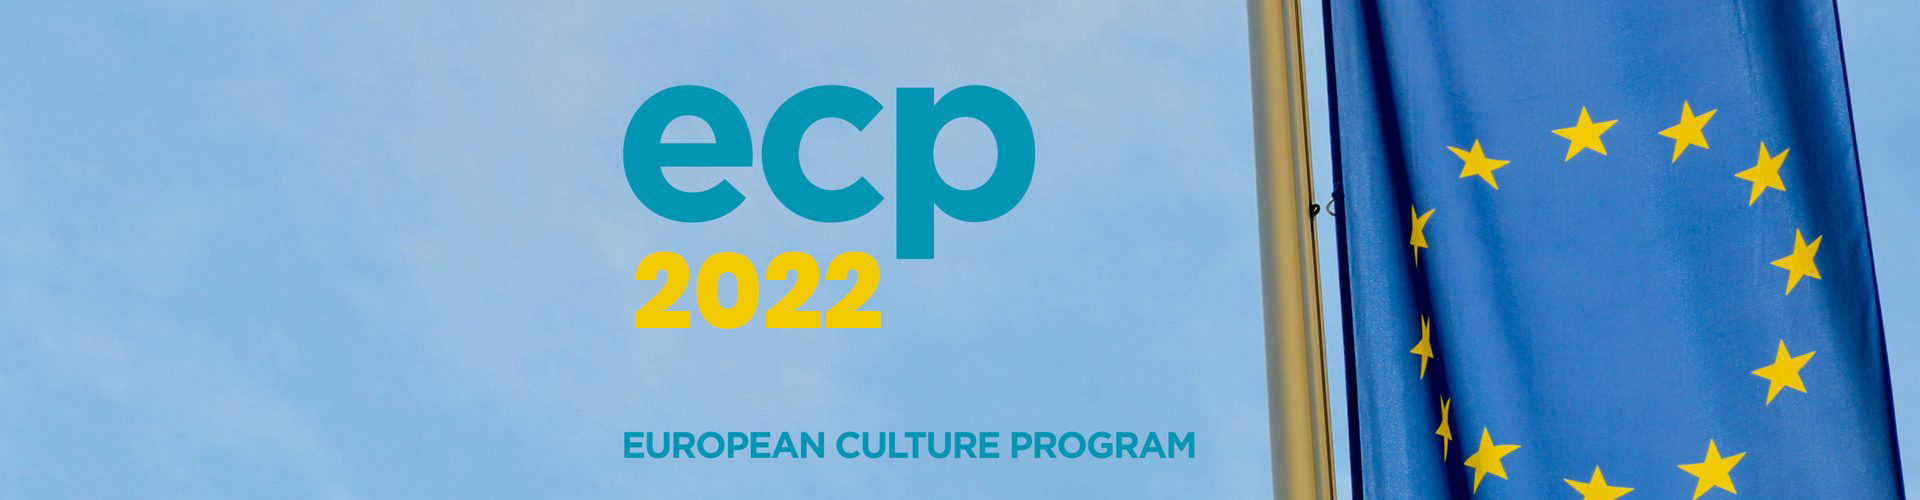 EUROPEAN CULTURE PROGRAM 2022